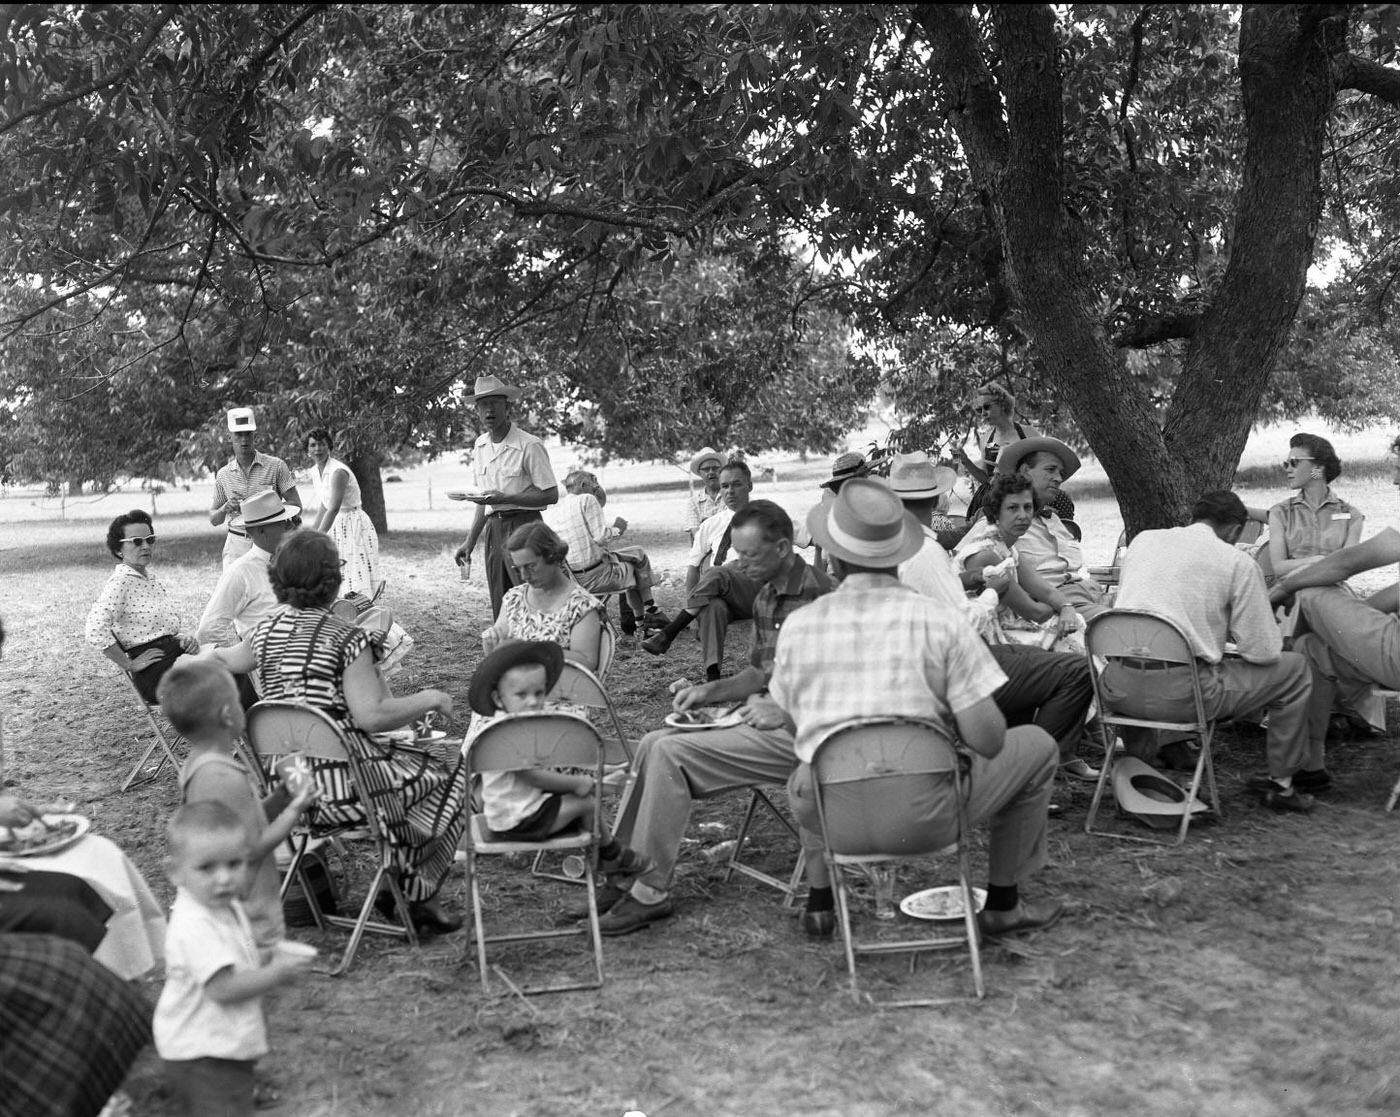 People Dining at Shorthorn Bar-B-Q, 1956.